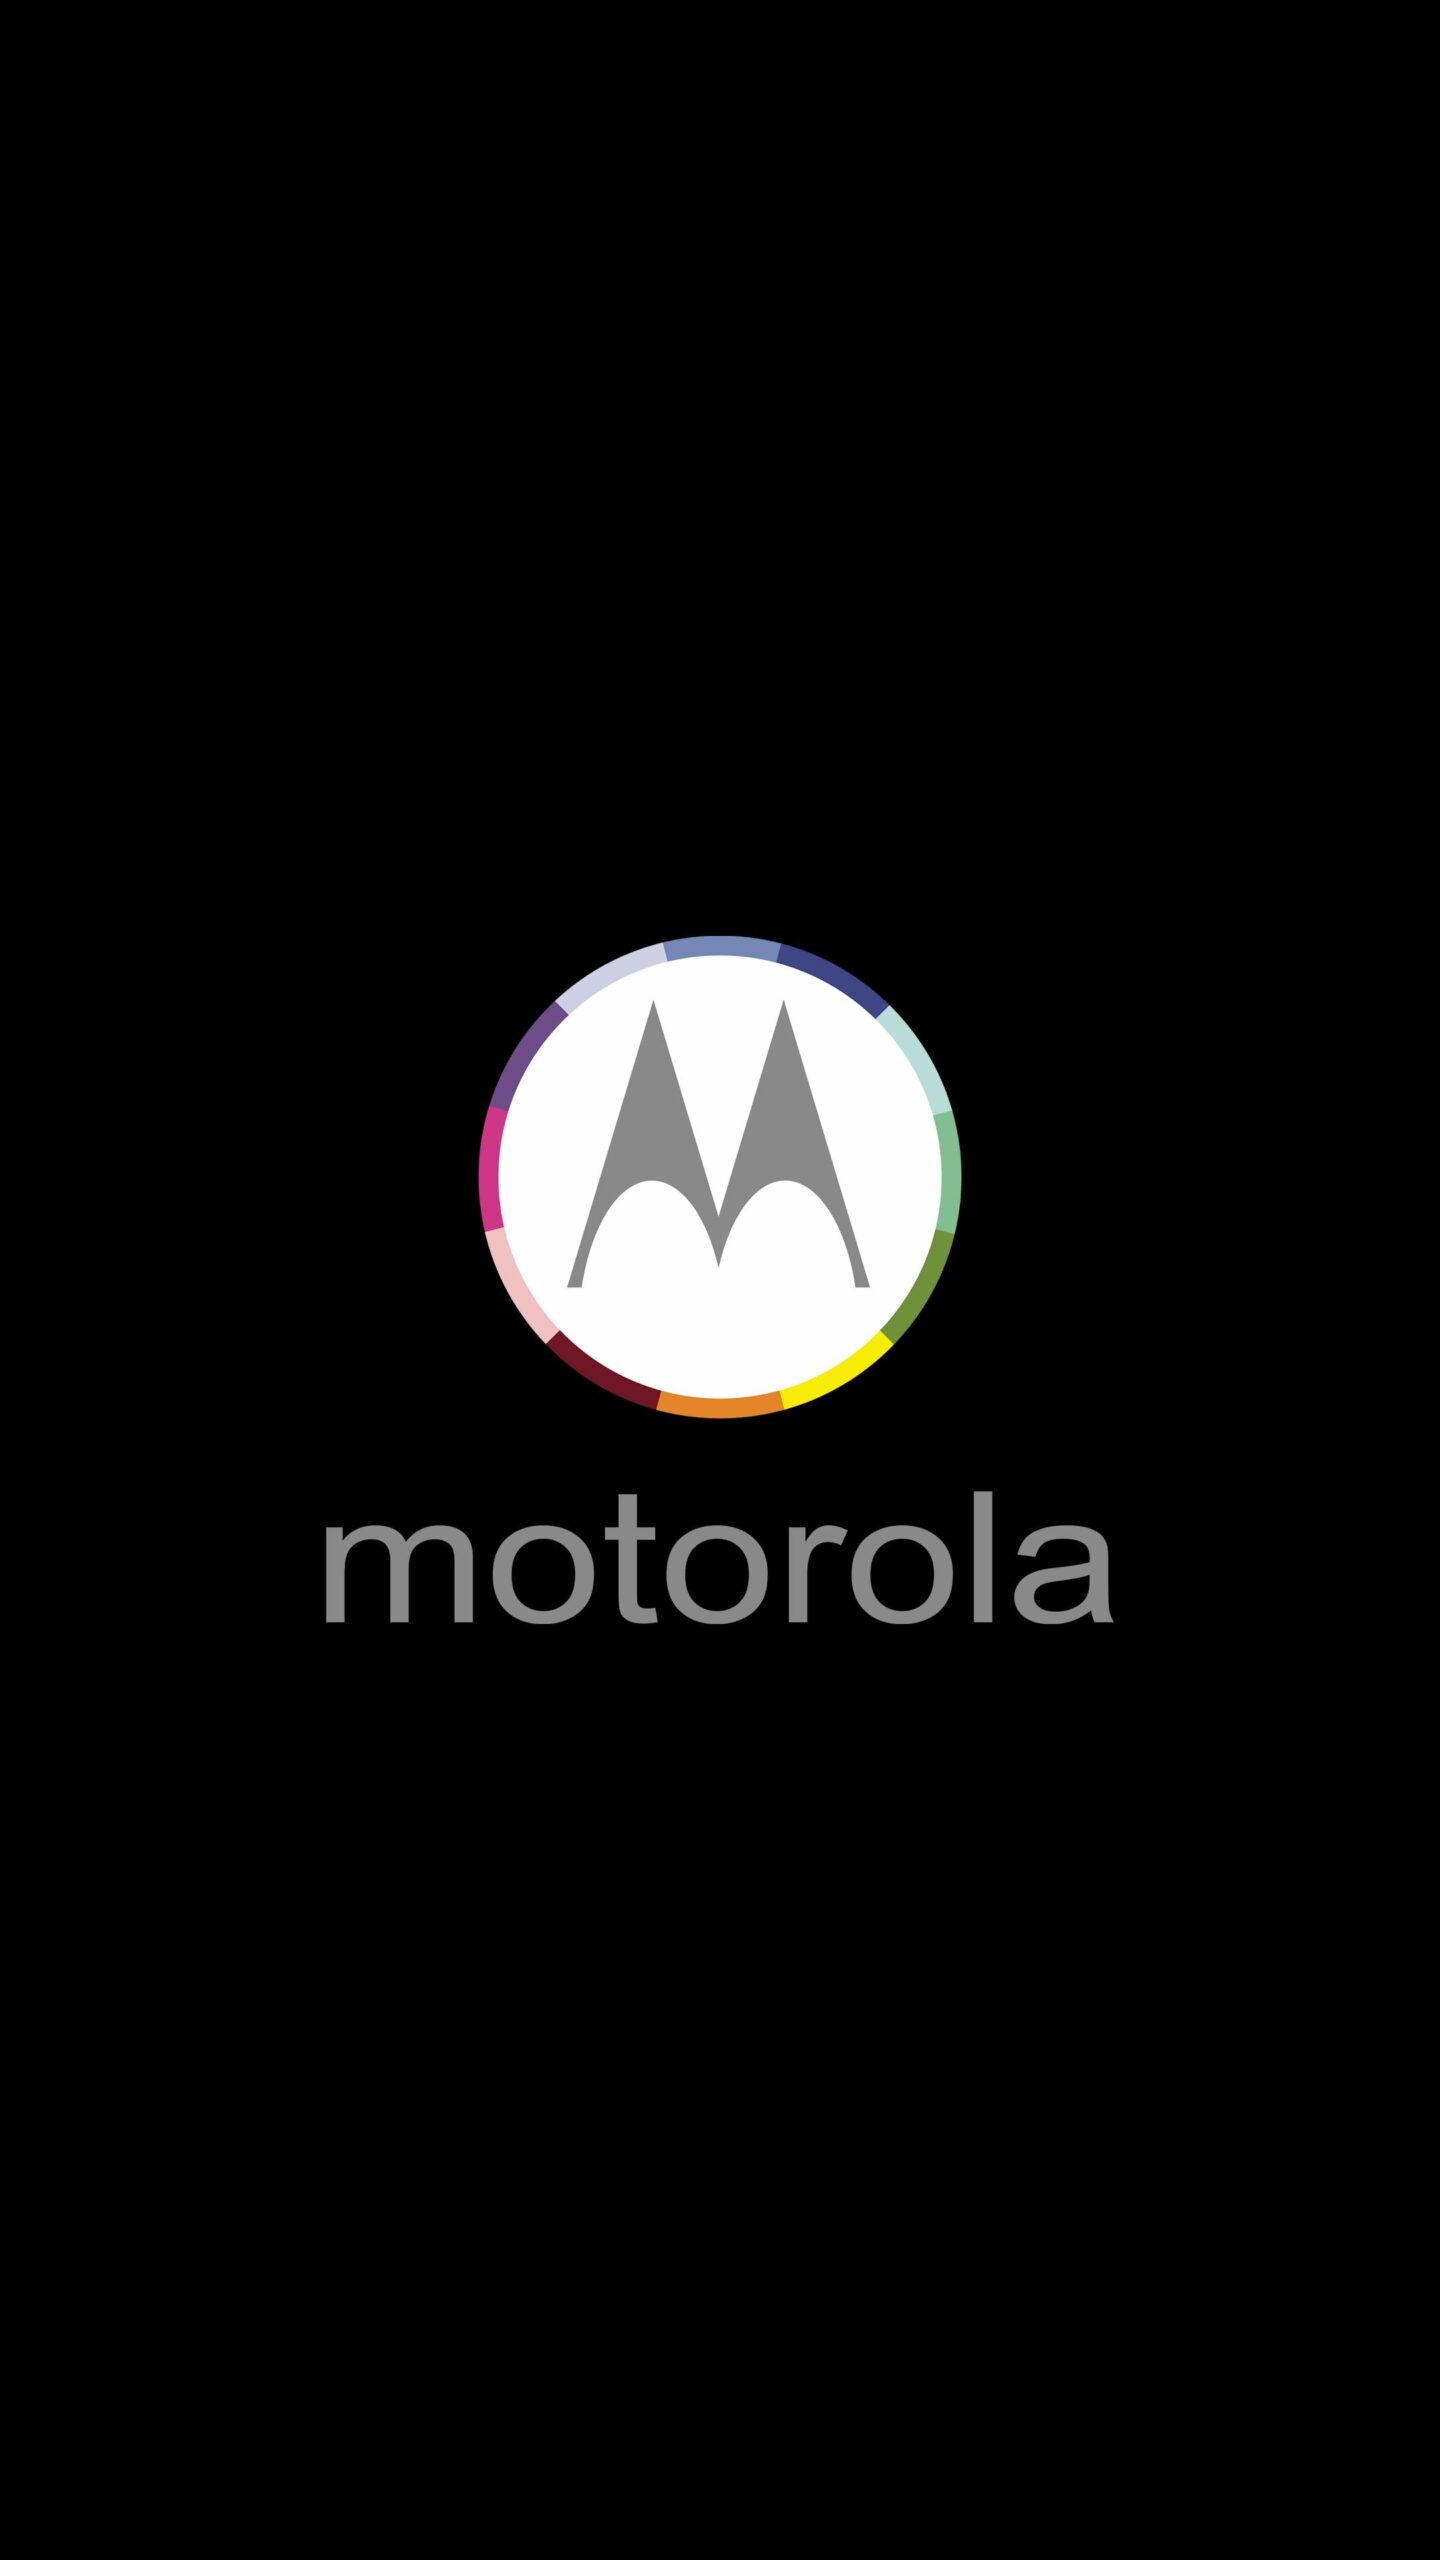 Motorola Logo Wallpaper 4k For Laptop